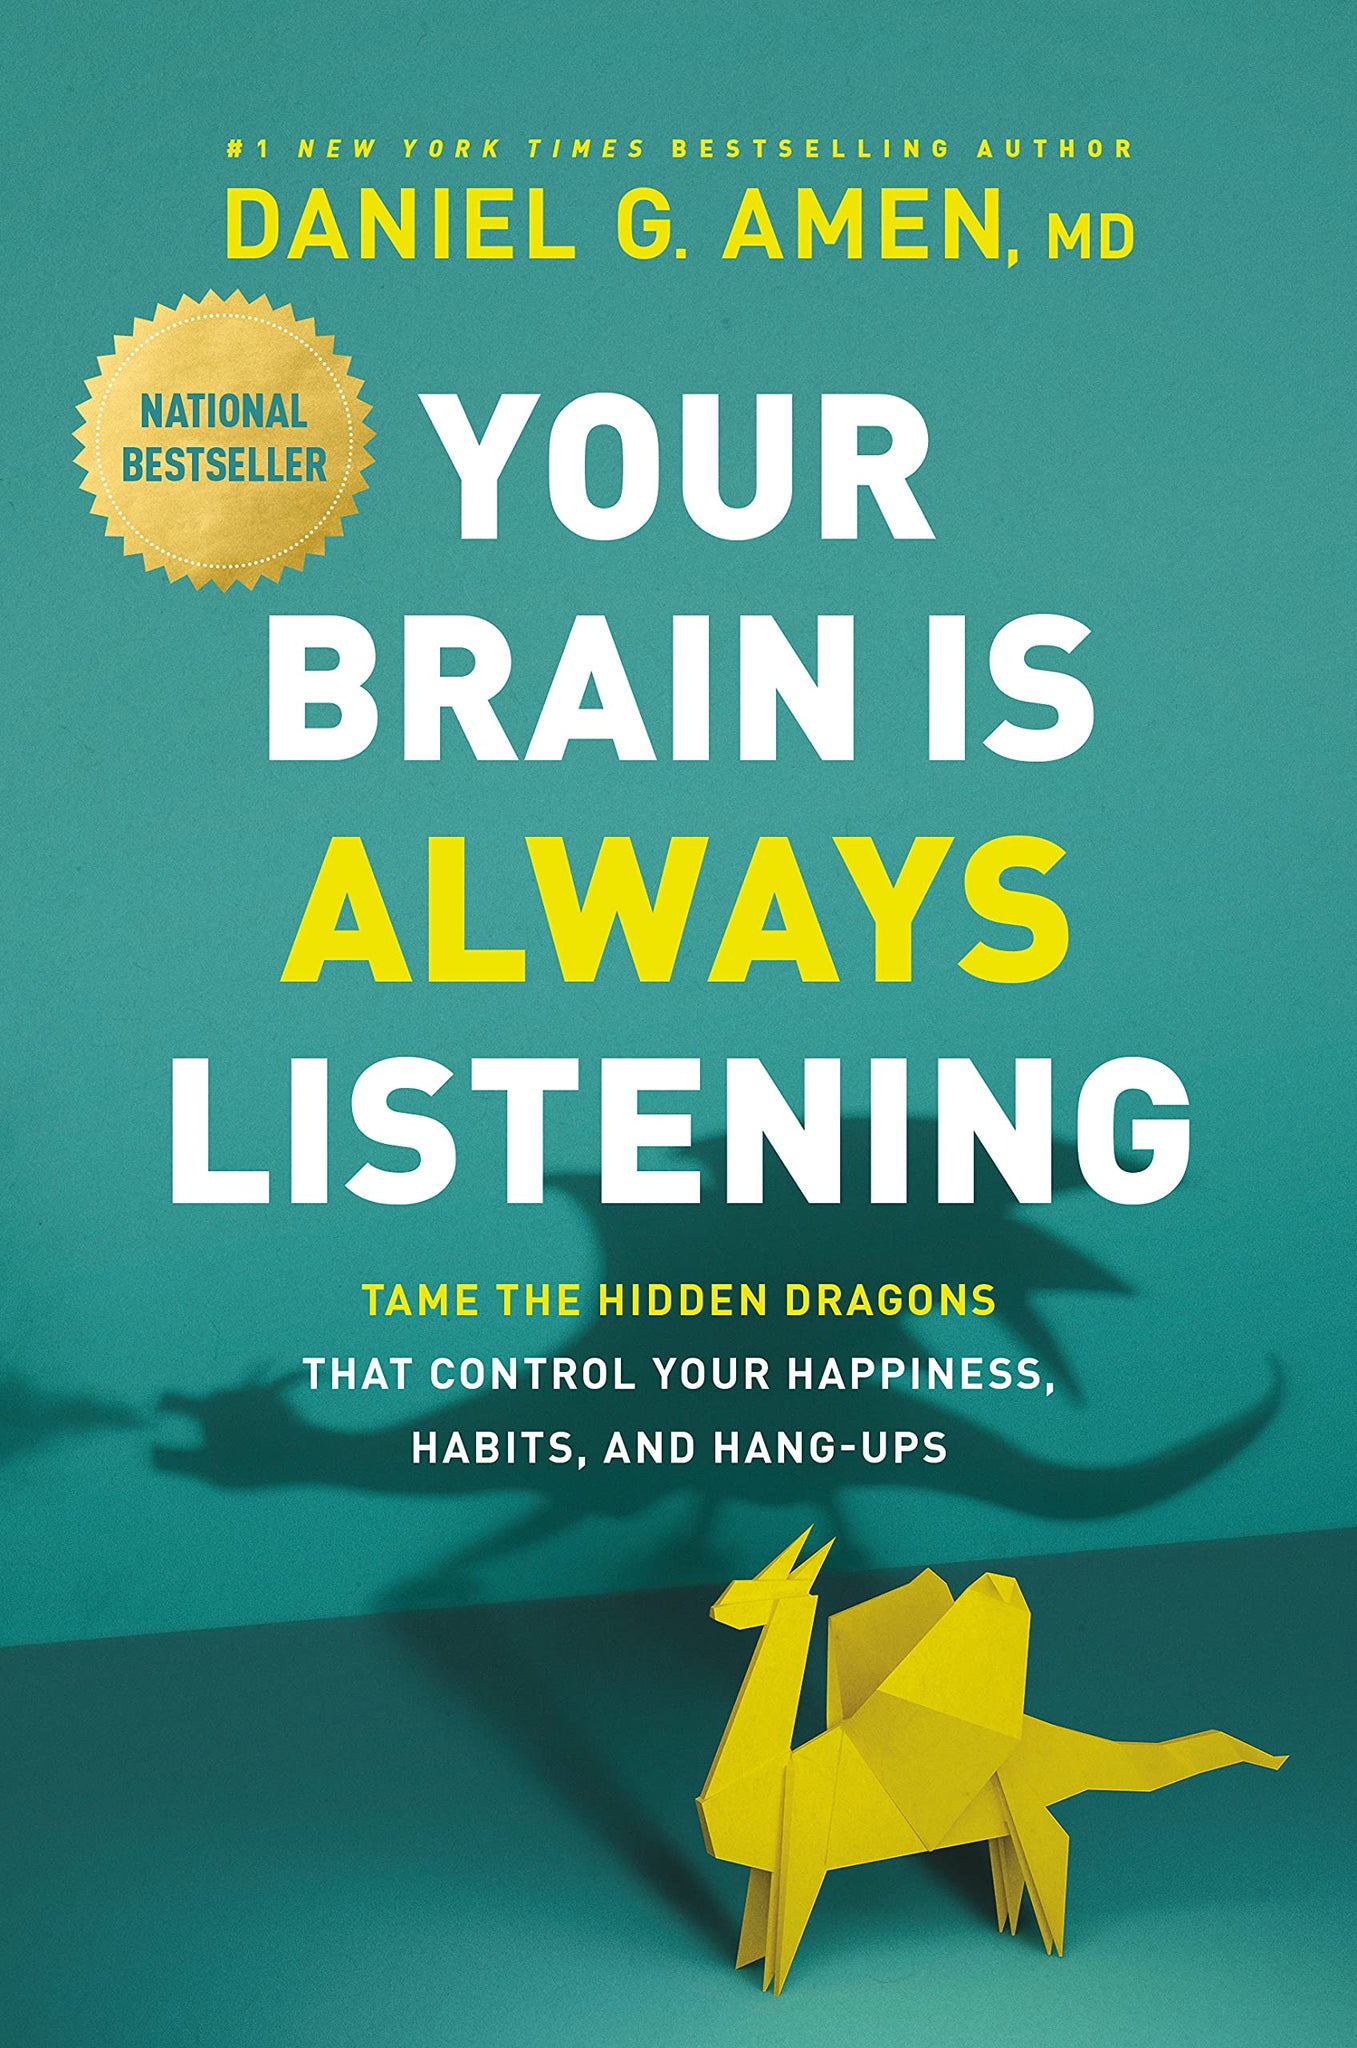 Your Brain Is Always Listening by Daniel G. Amen